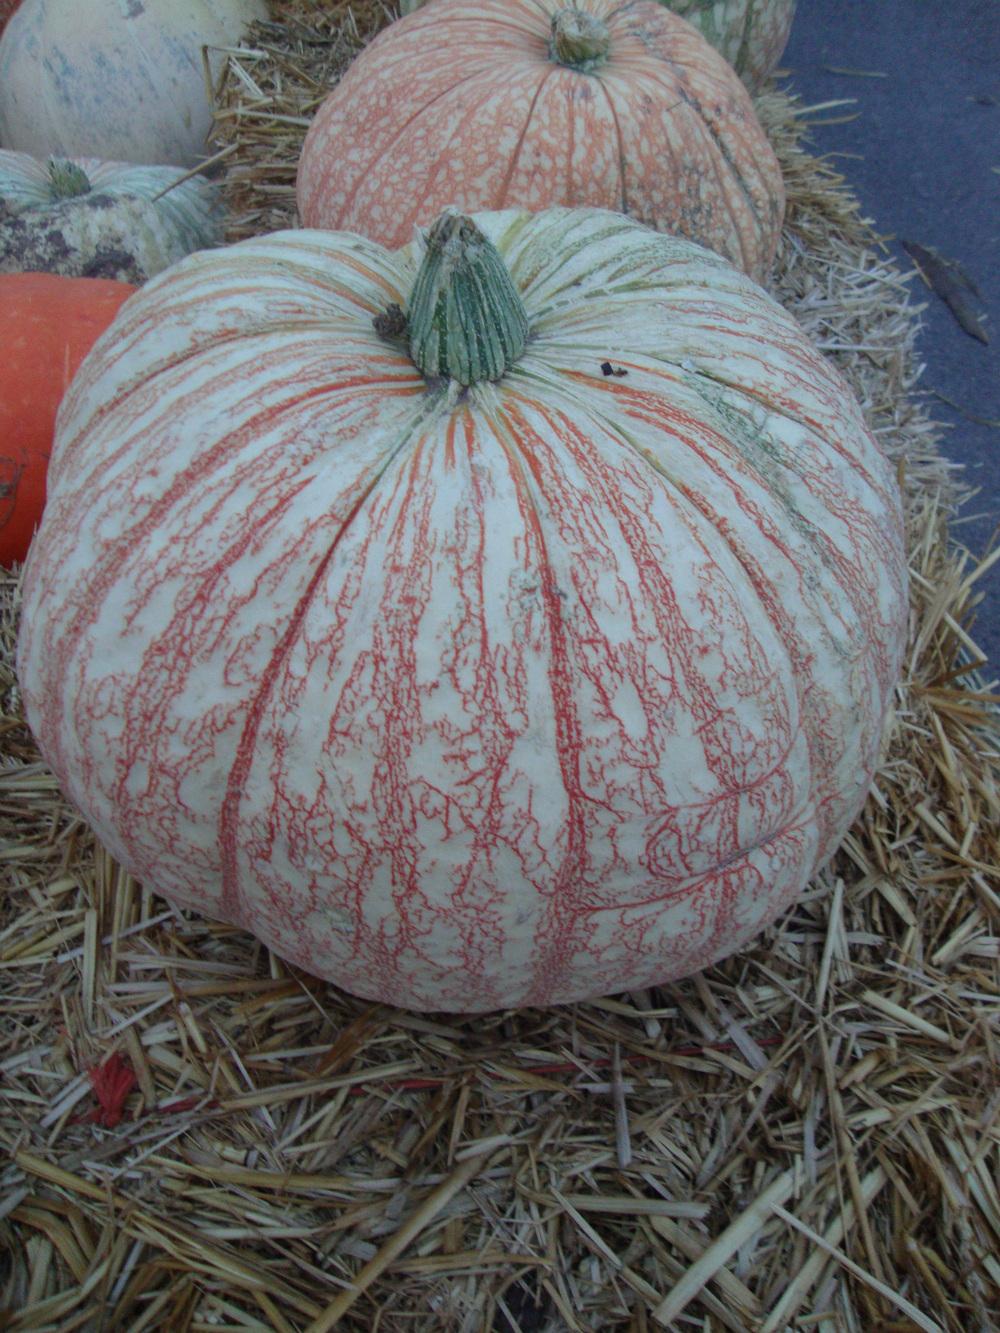 Photo of Pumpkin (Cucurbita maxima 'One Too Many') uploaded by Paul2032